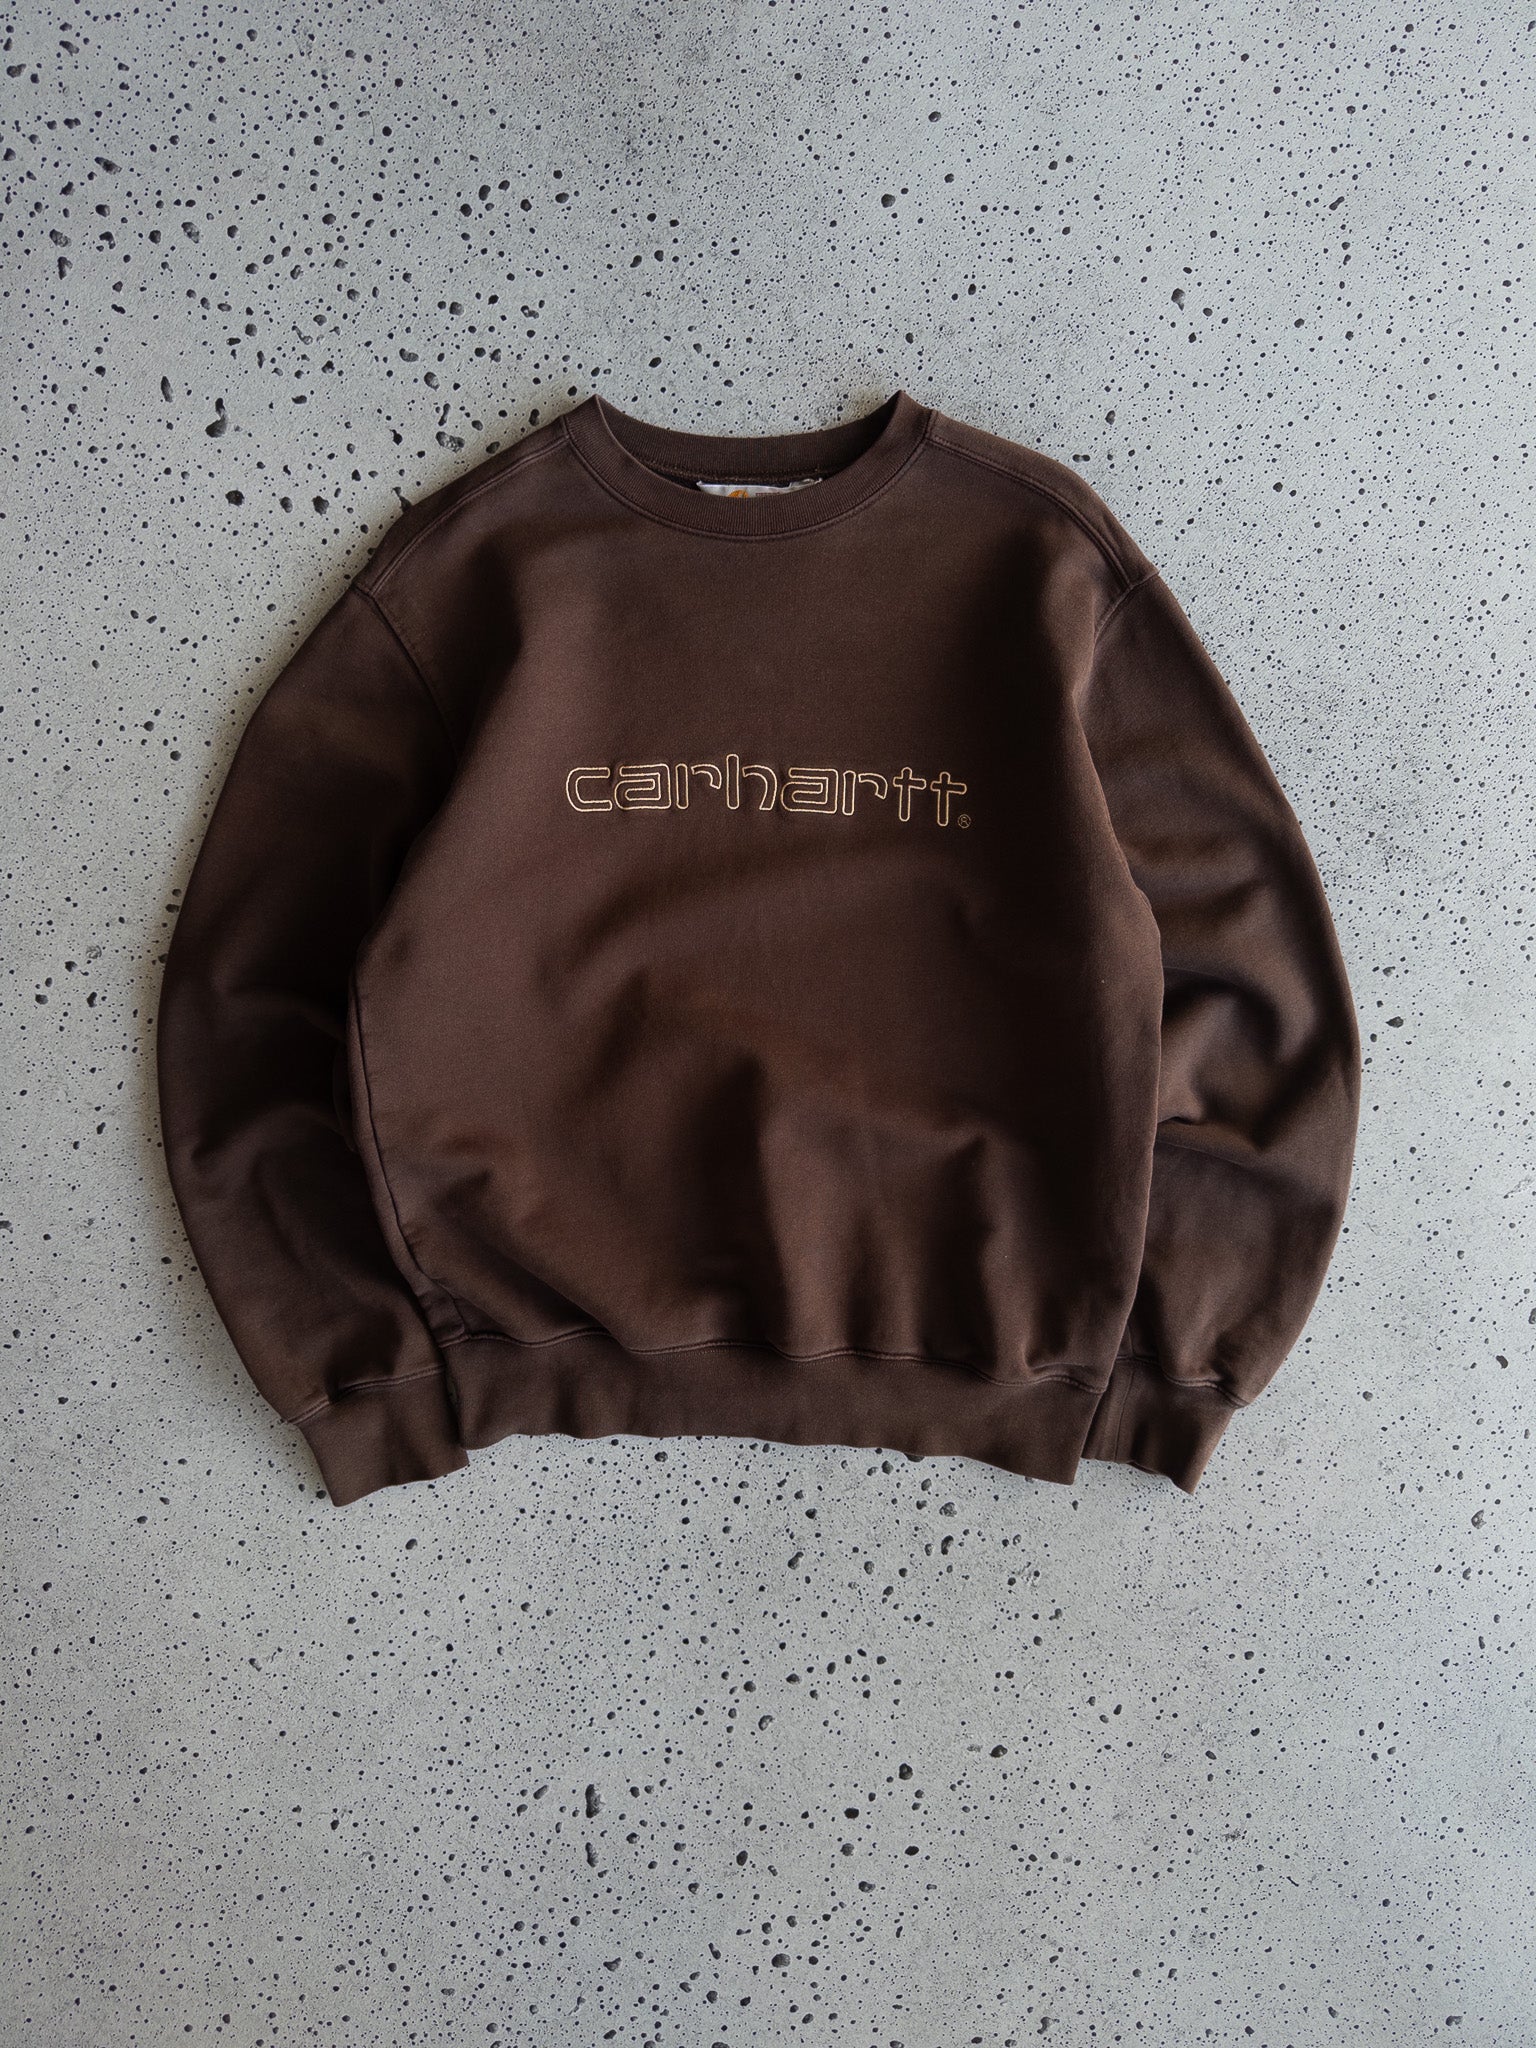 Vintage Carhartt Sweatshirt (M)